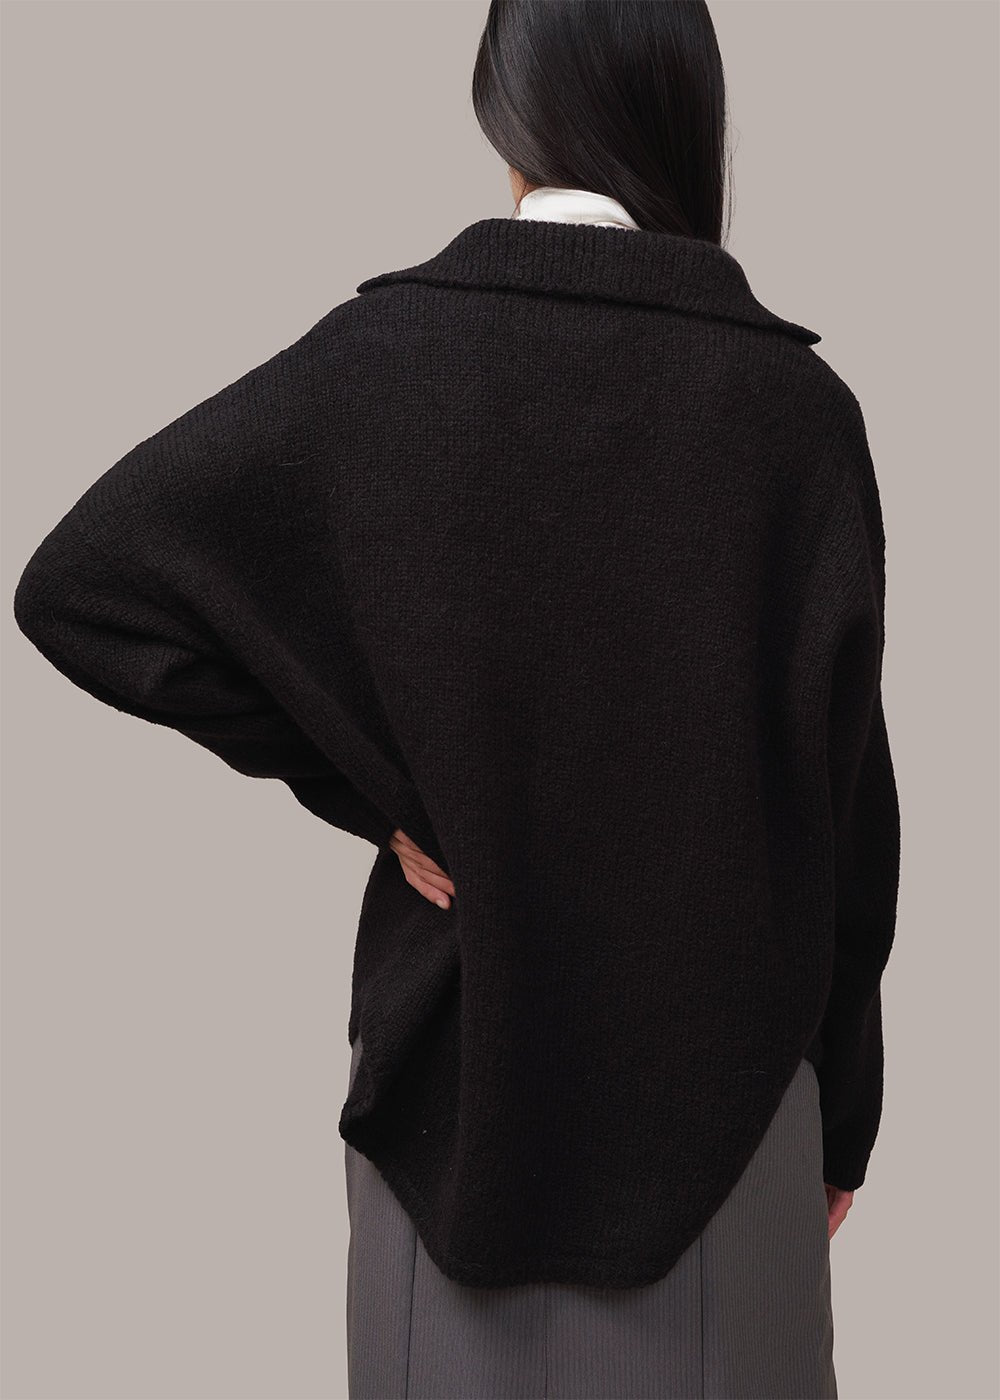 Cordera Black Baby Alpaca Polo Jacket - New Classics Studios Sustainable Ethical Fashion Canada